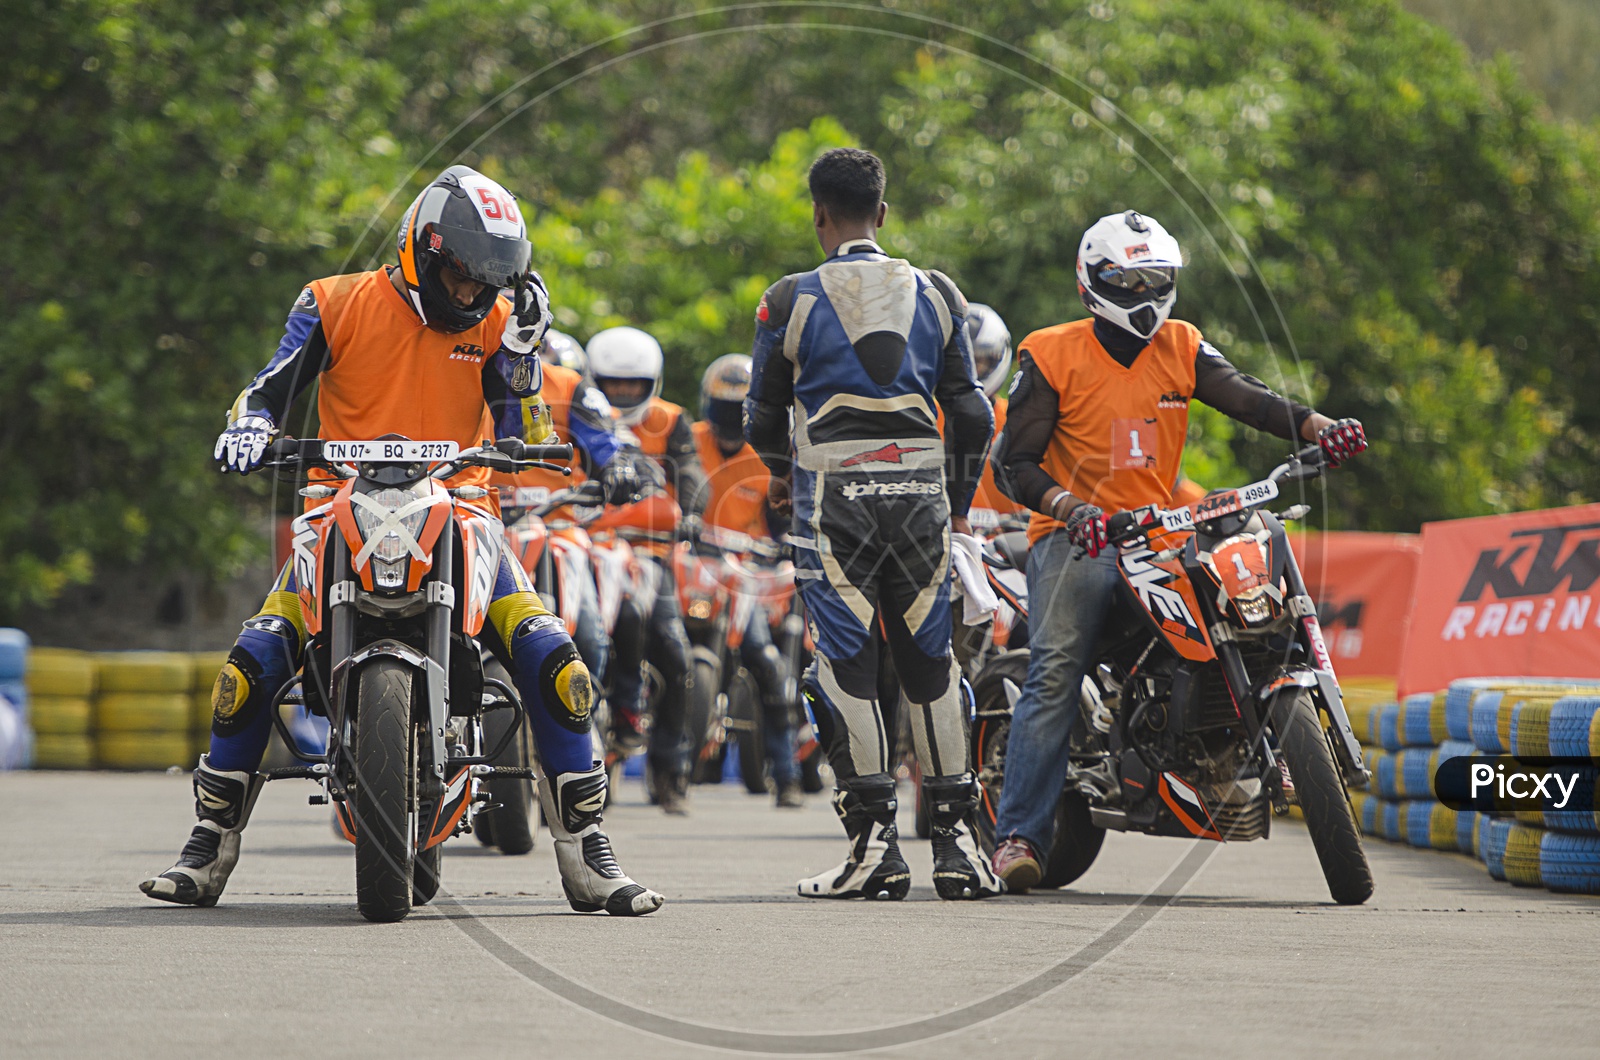 Bike Riders Riding KTM Bikes At Orange Day KTM Event in Chennai